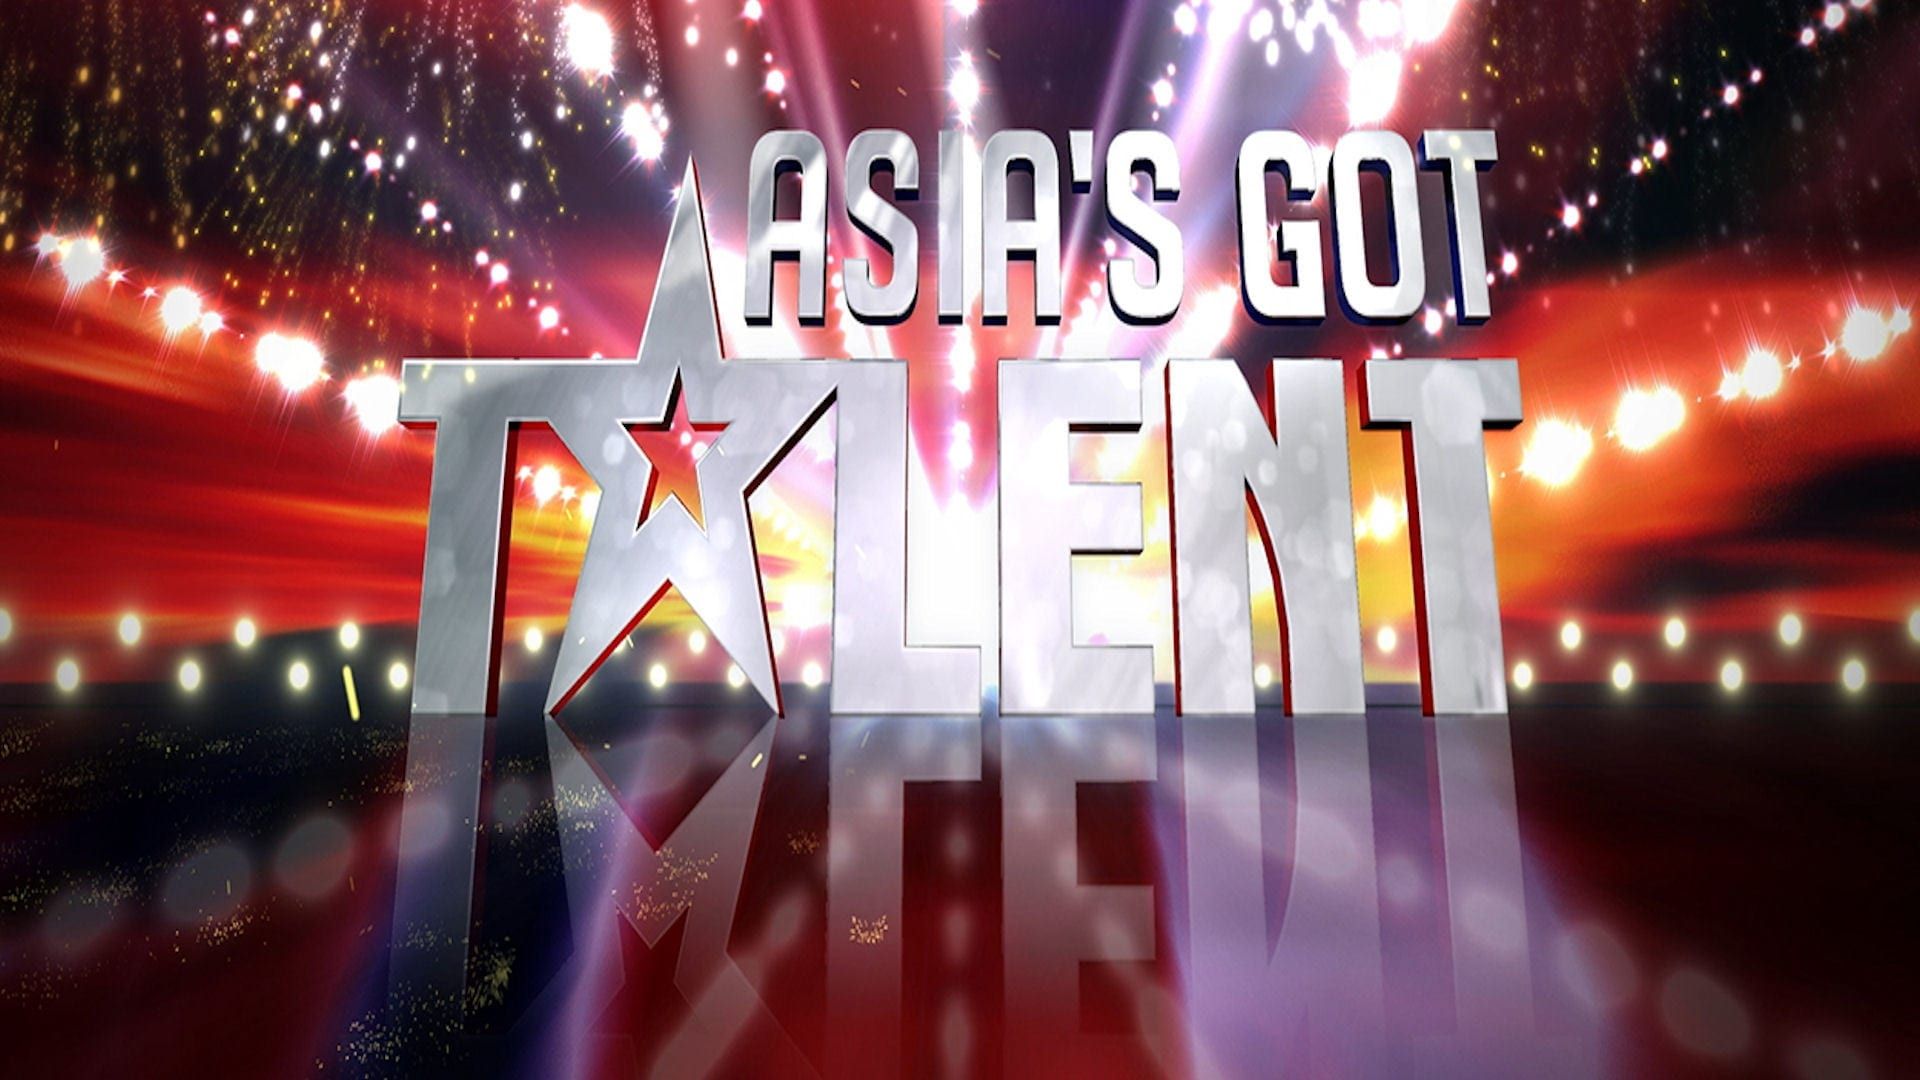 Asia's Got Talent background